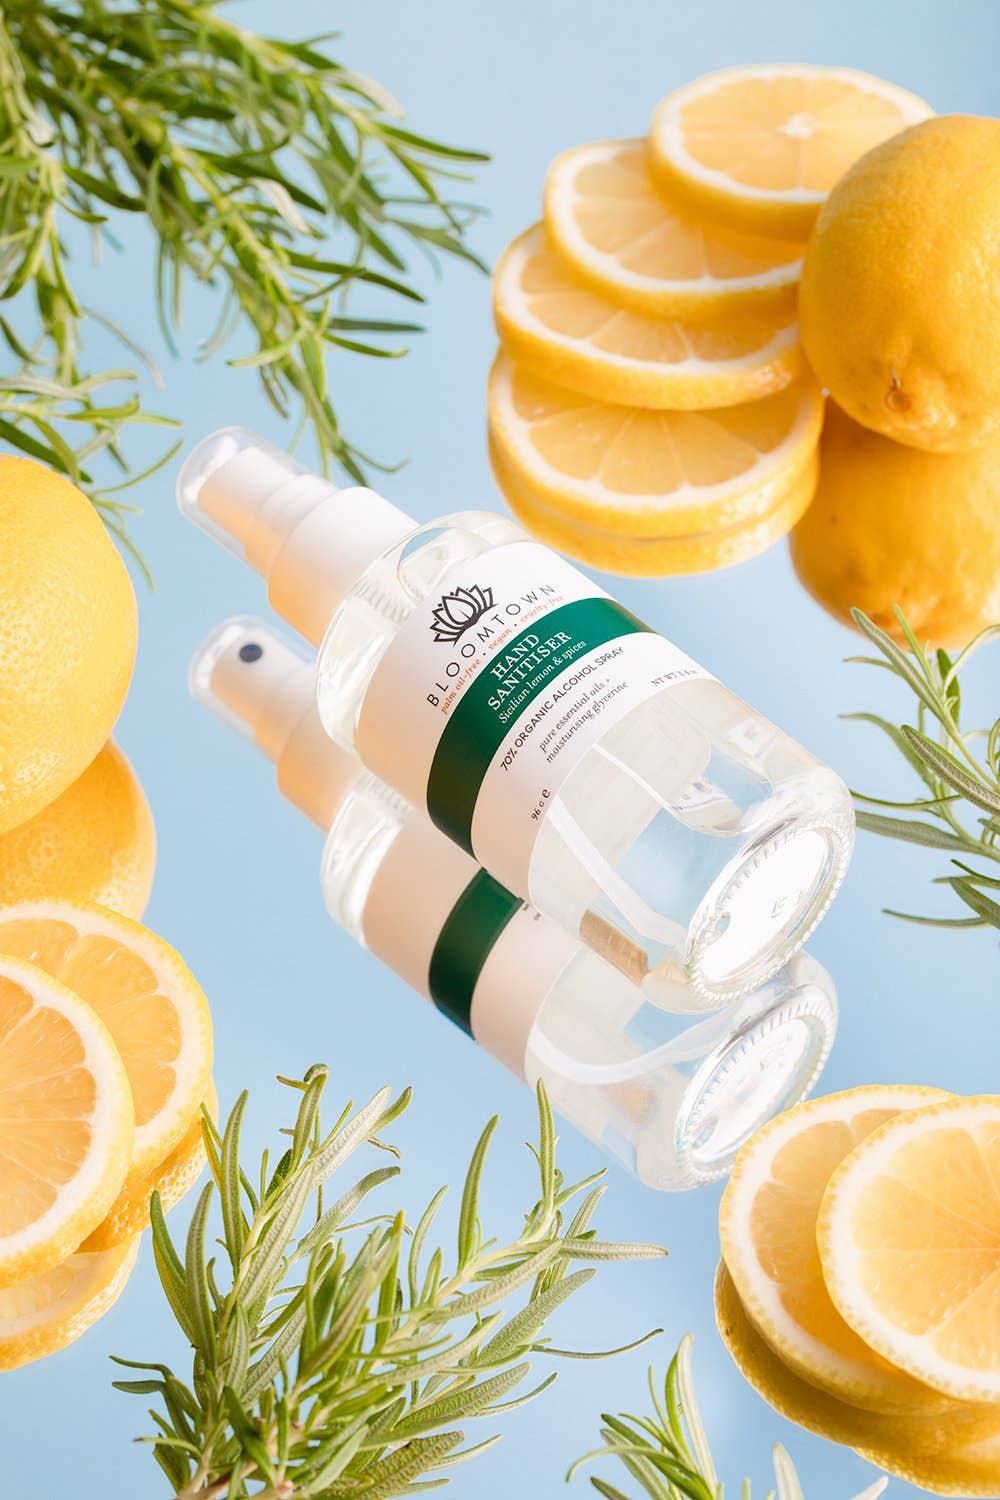 70% Alcohol Organic Hand Sanitiser Spray - Lemon & Spices (Cleanse) - Natural & Organic